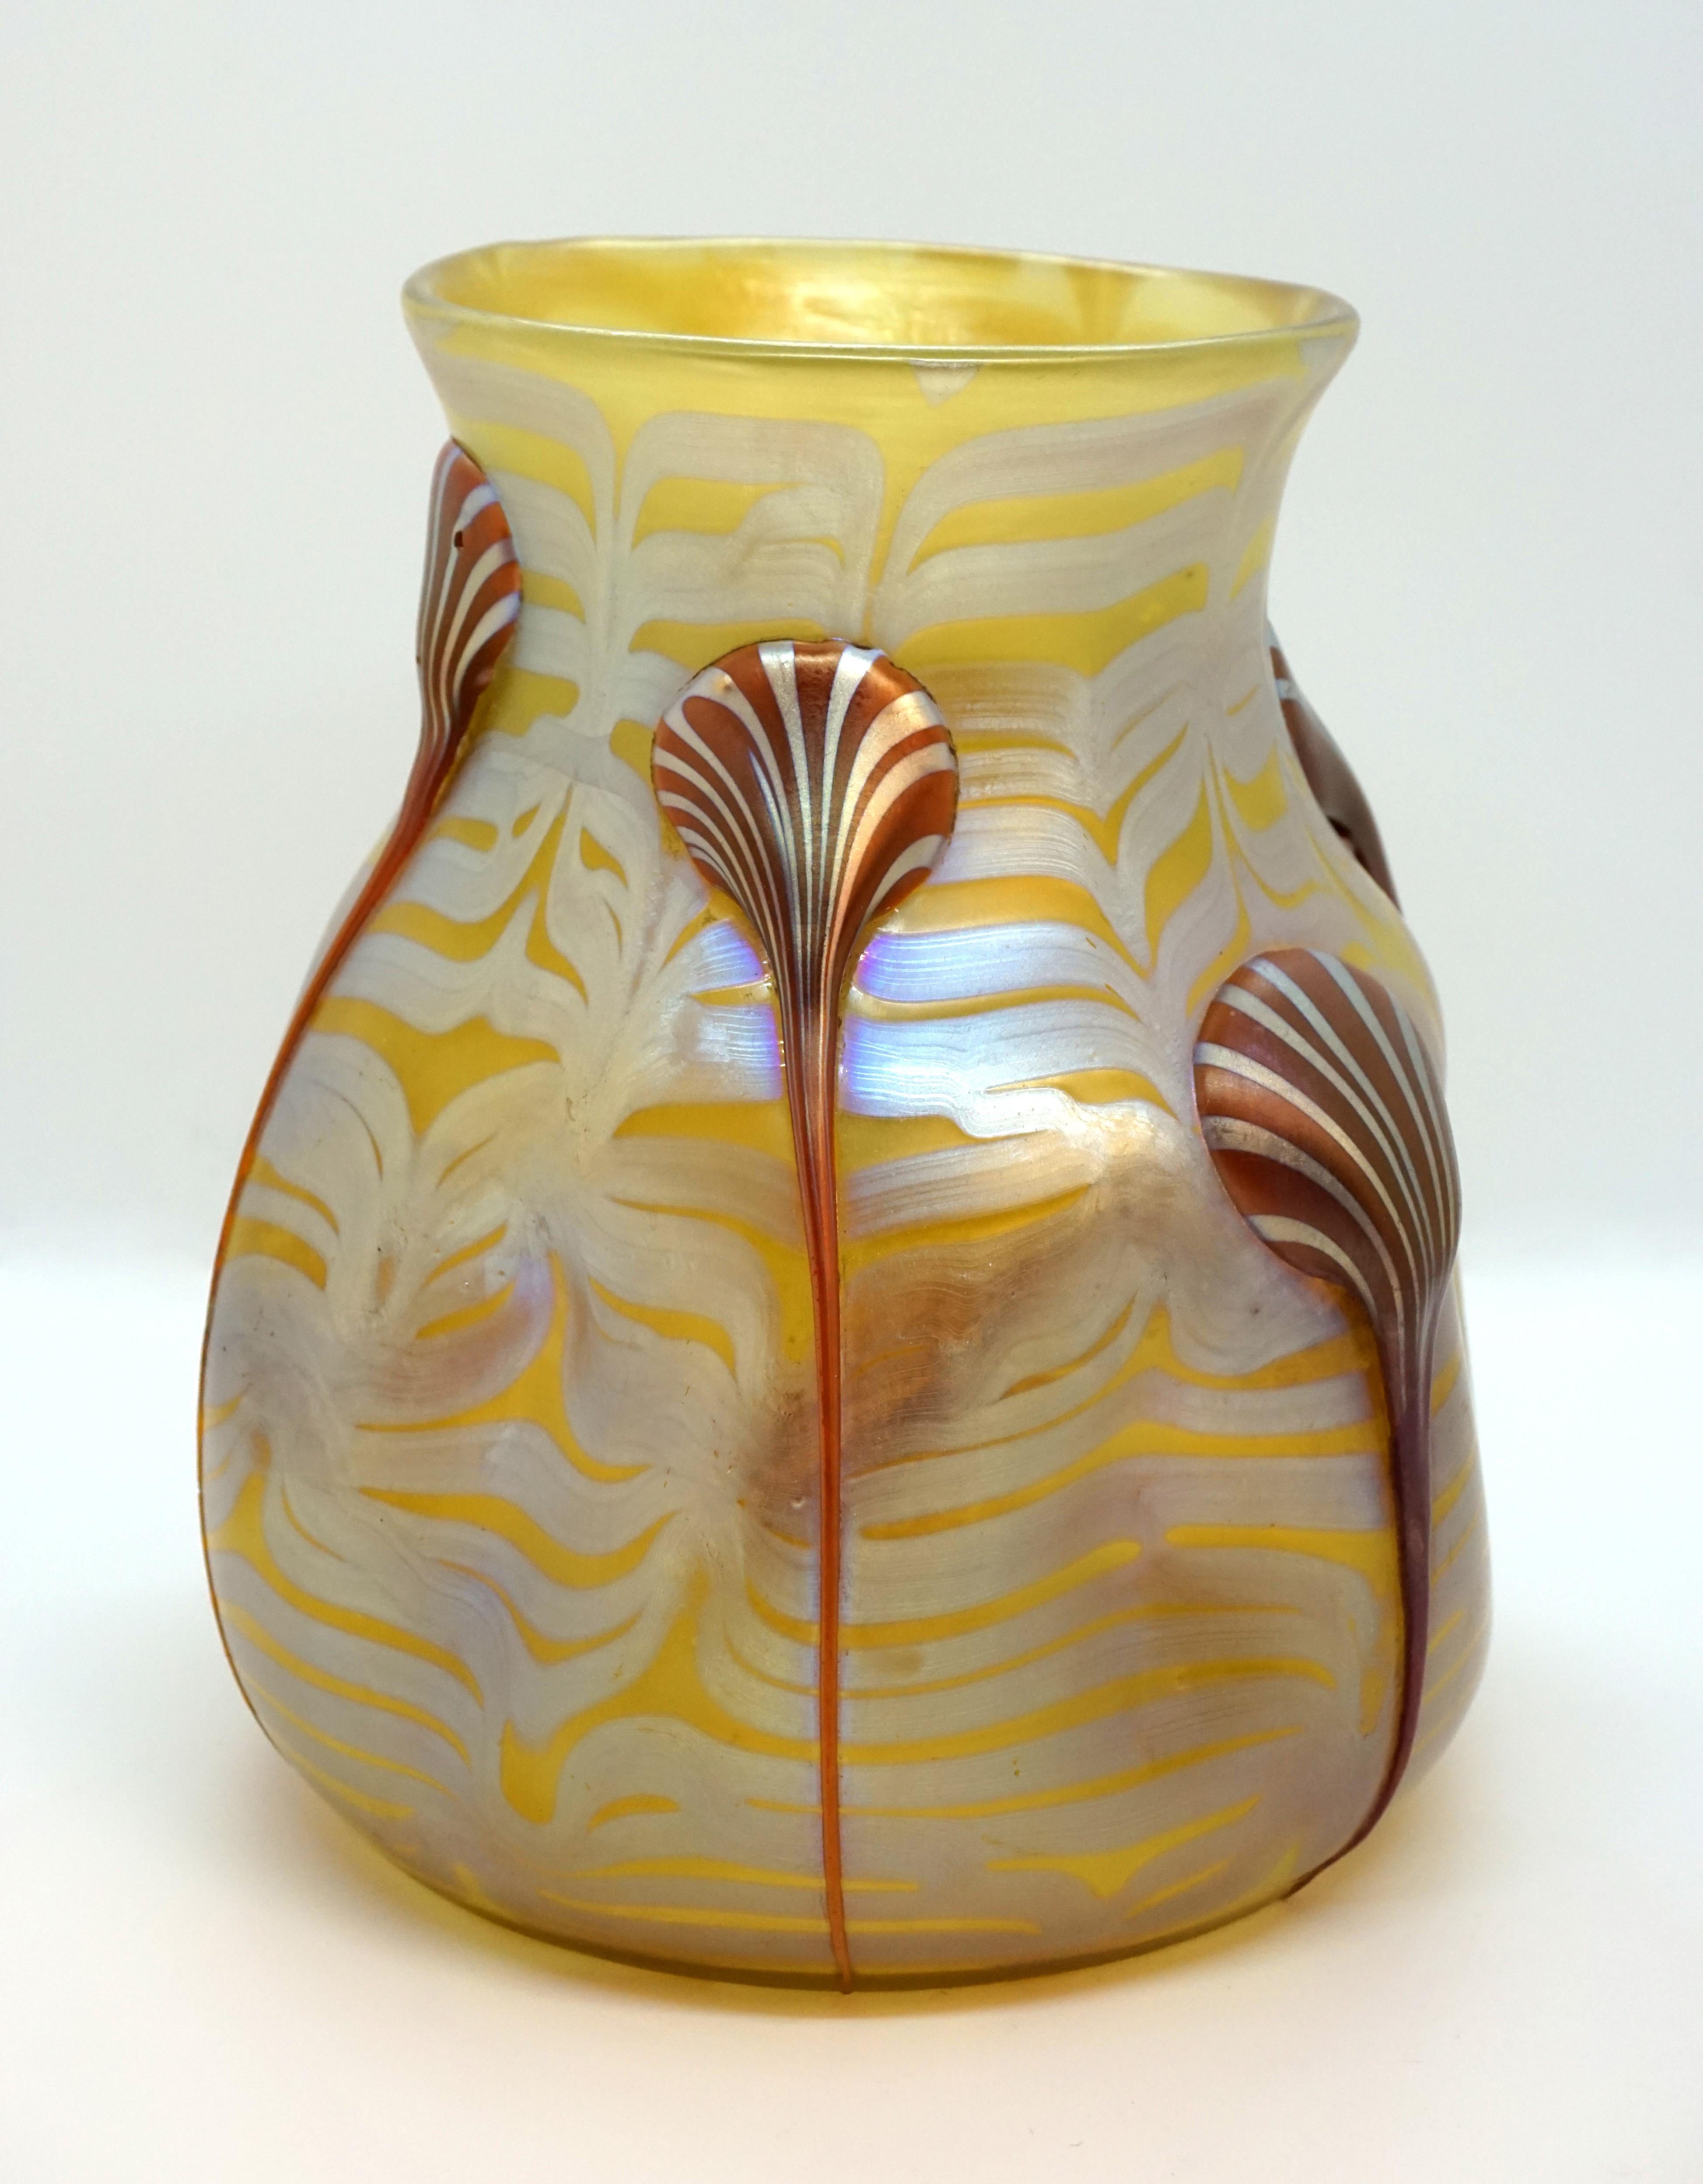 Hand-Crafted Loetz Art Nouveau Vase Phenomenon Genre 1/4 with Drop-Applications, 1900